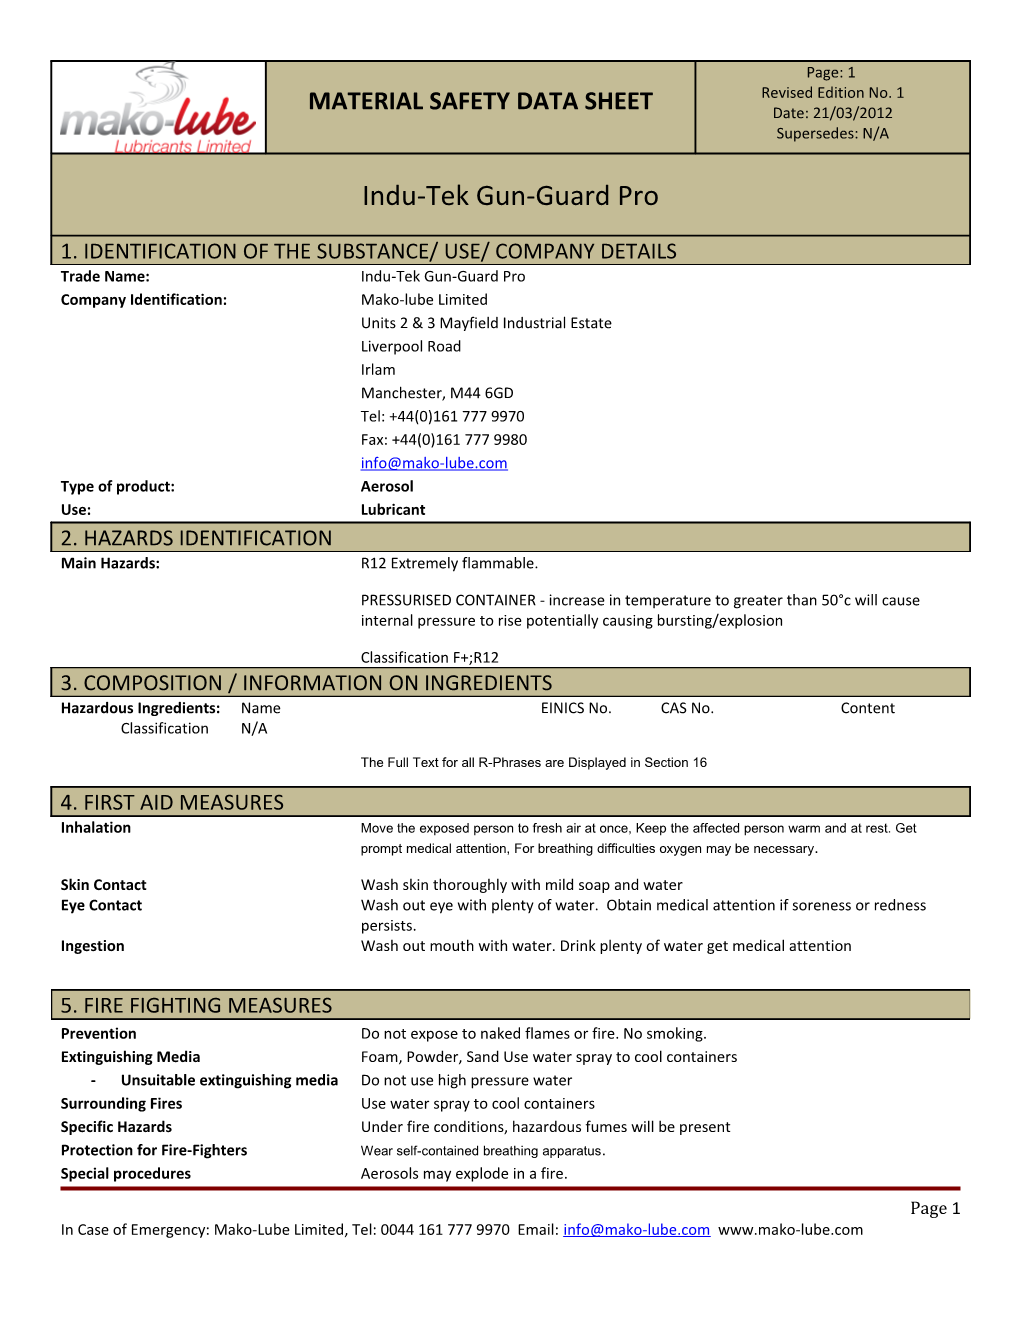 Trade Name:Indu-Tek Gun-Guard Pro